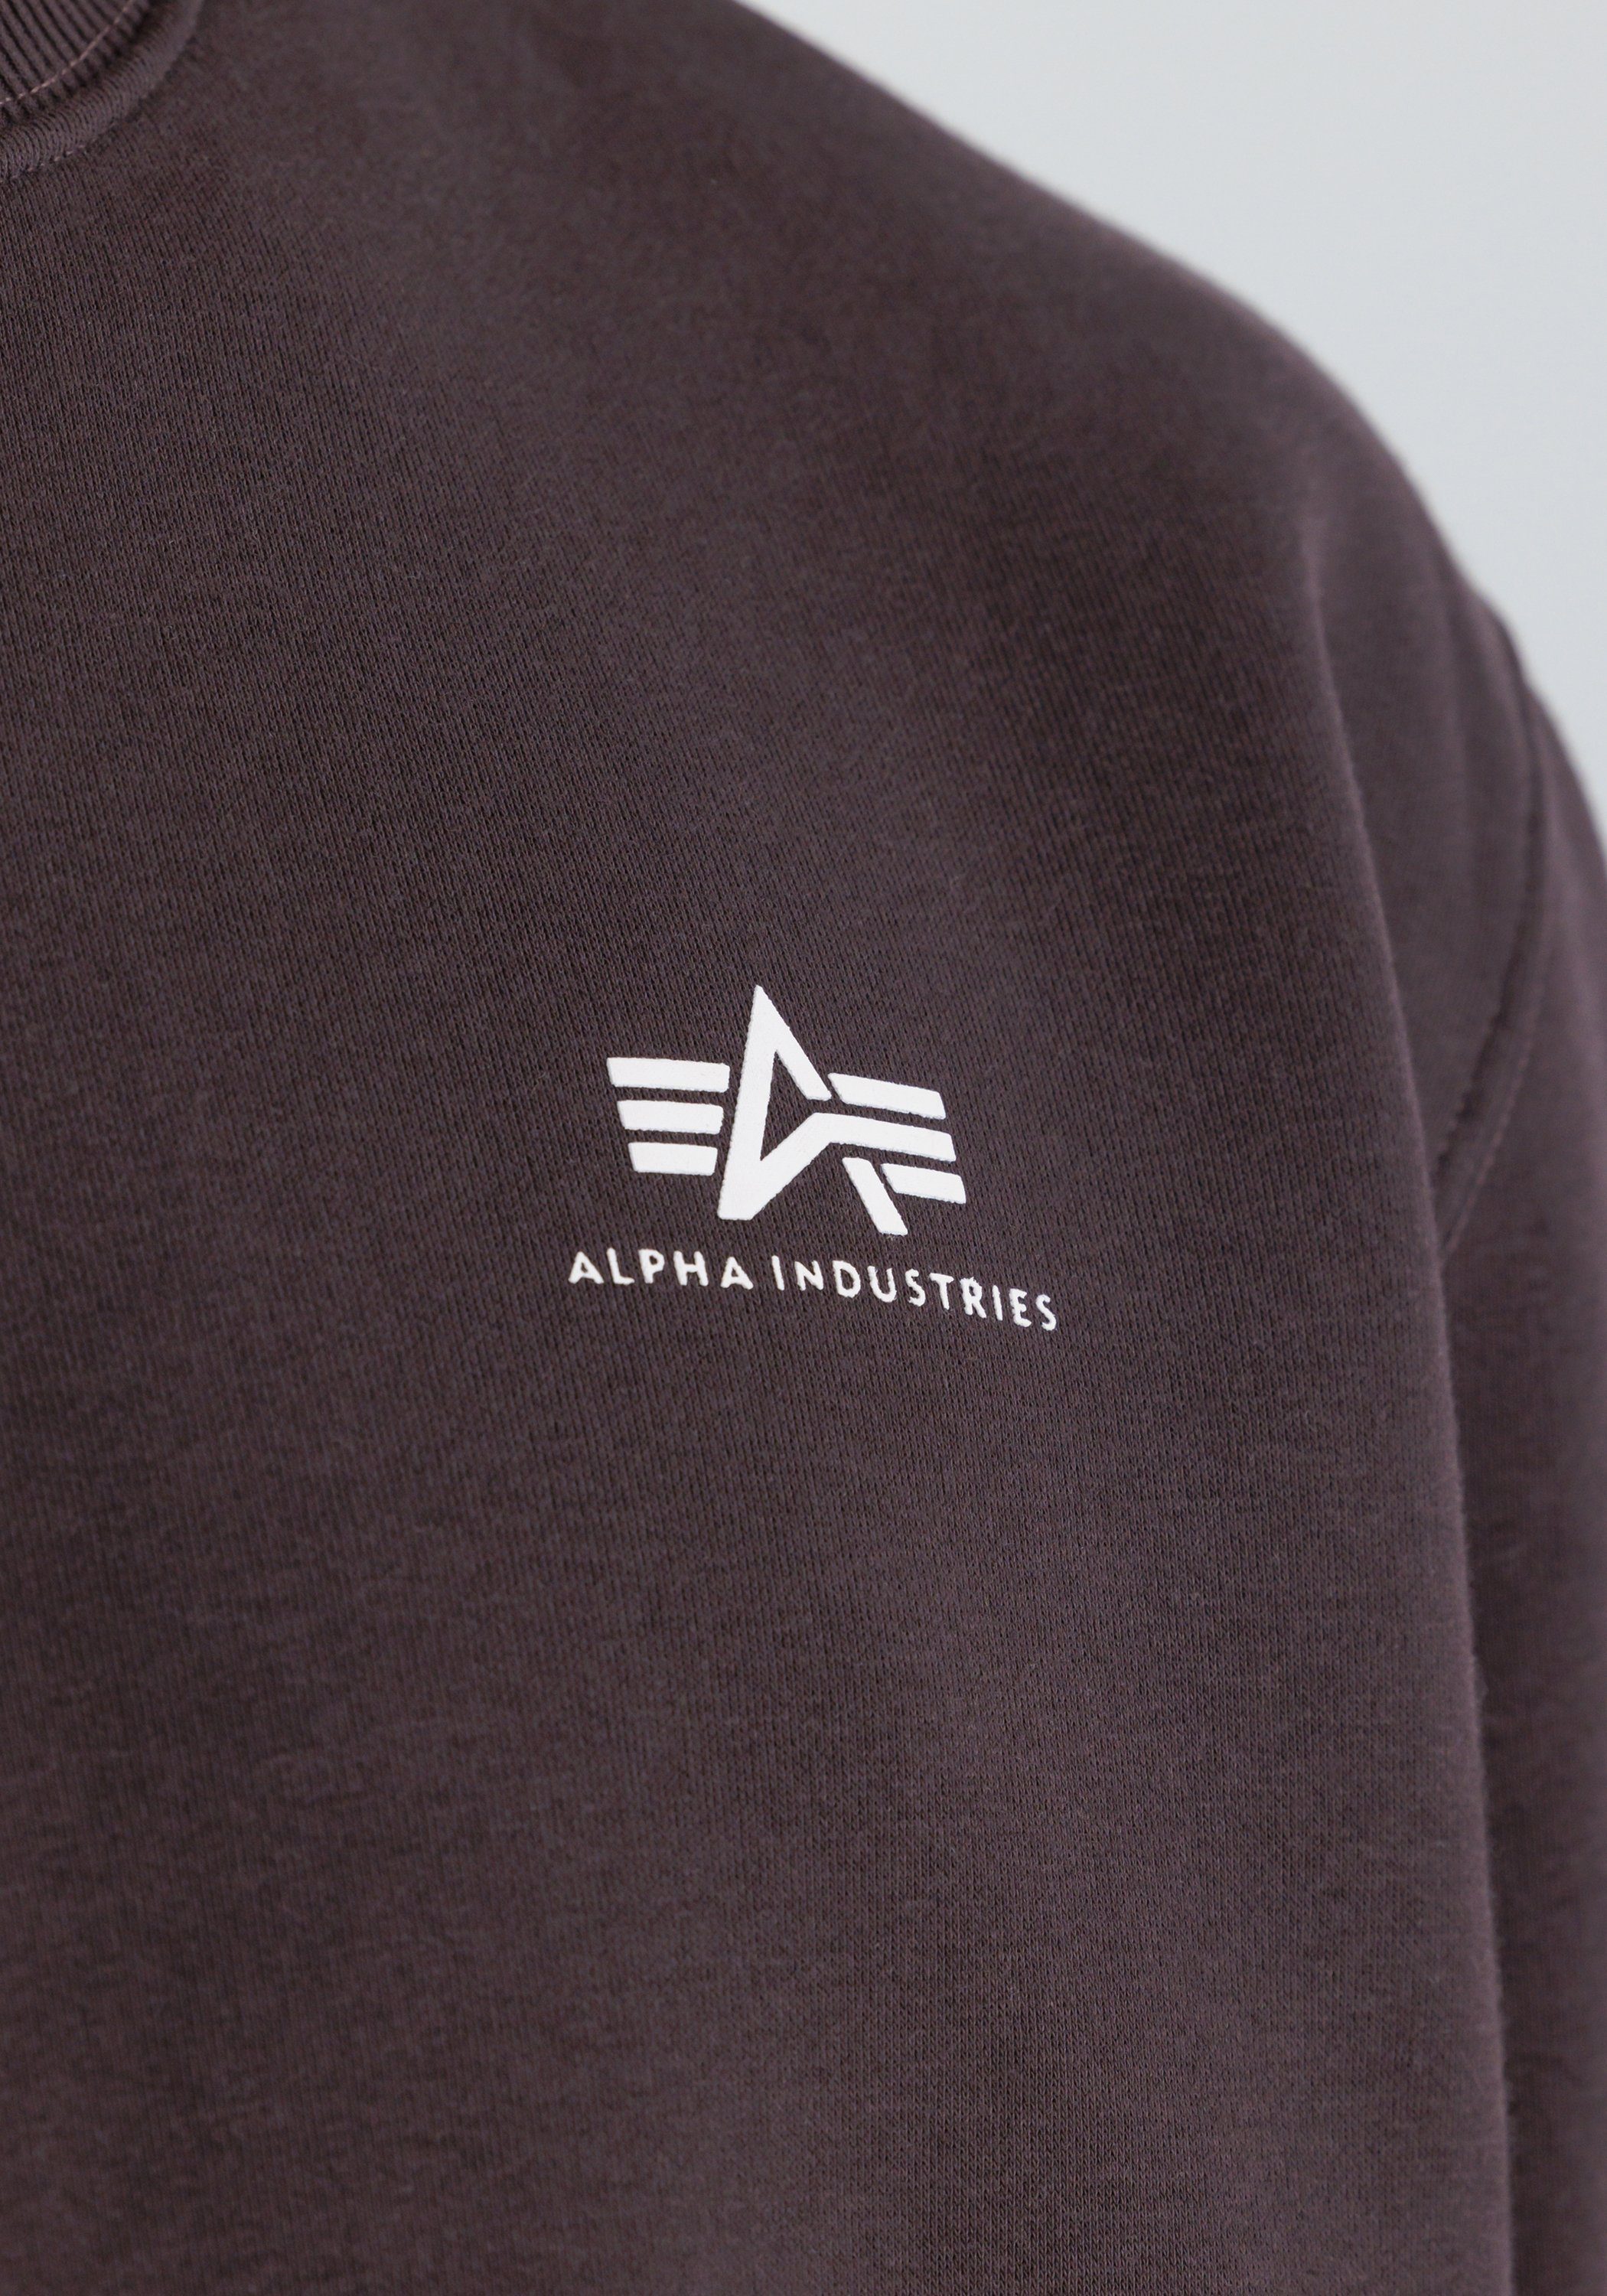 Alpha Industries Sweater Alpha brown Sweater - Sweatshirts Men Basic Industries Logo Small hunter